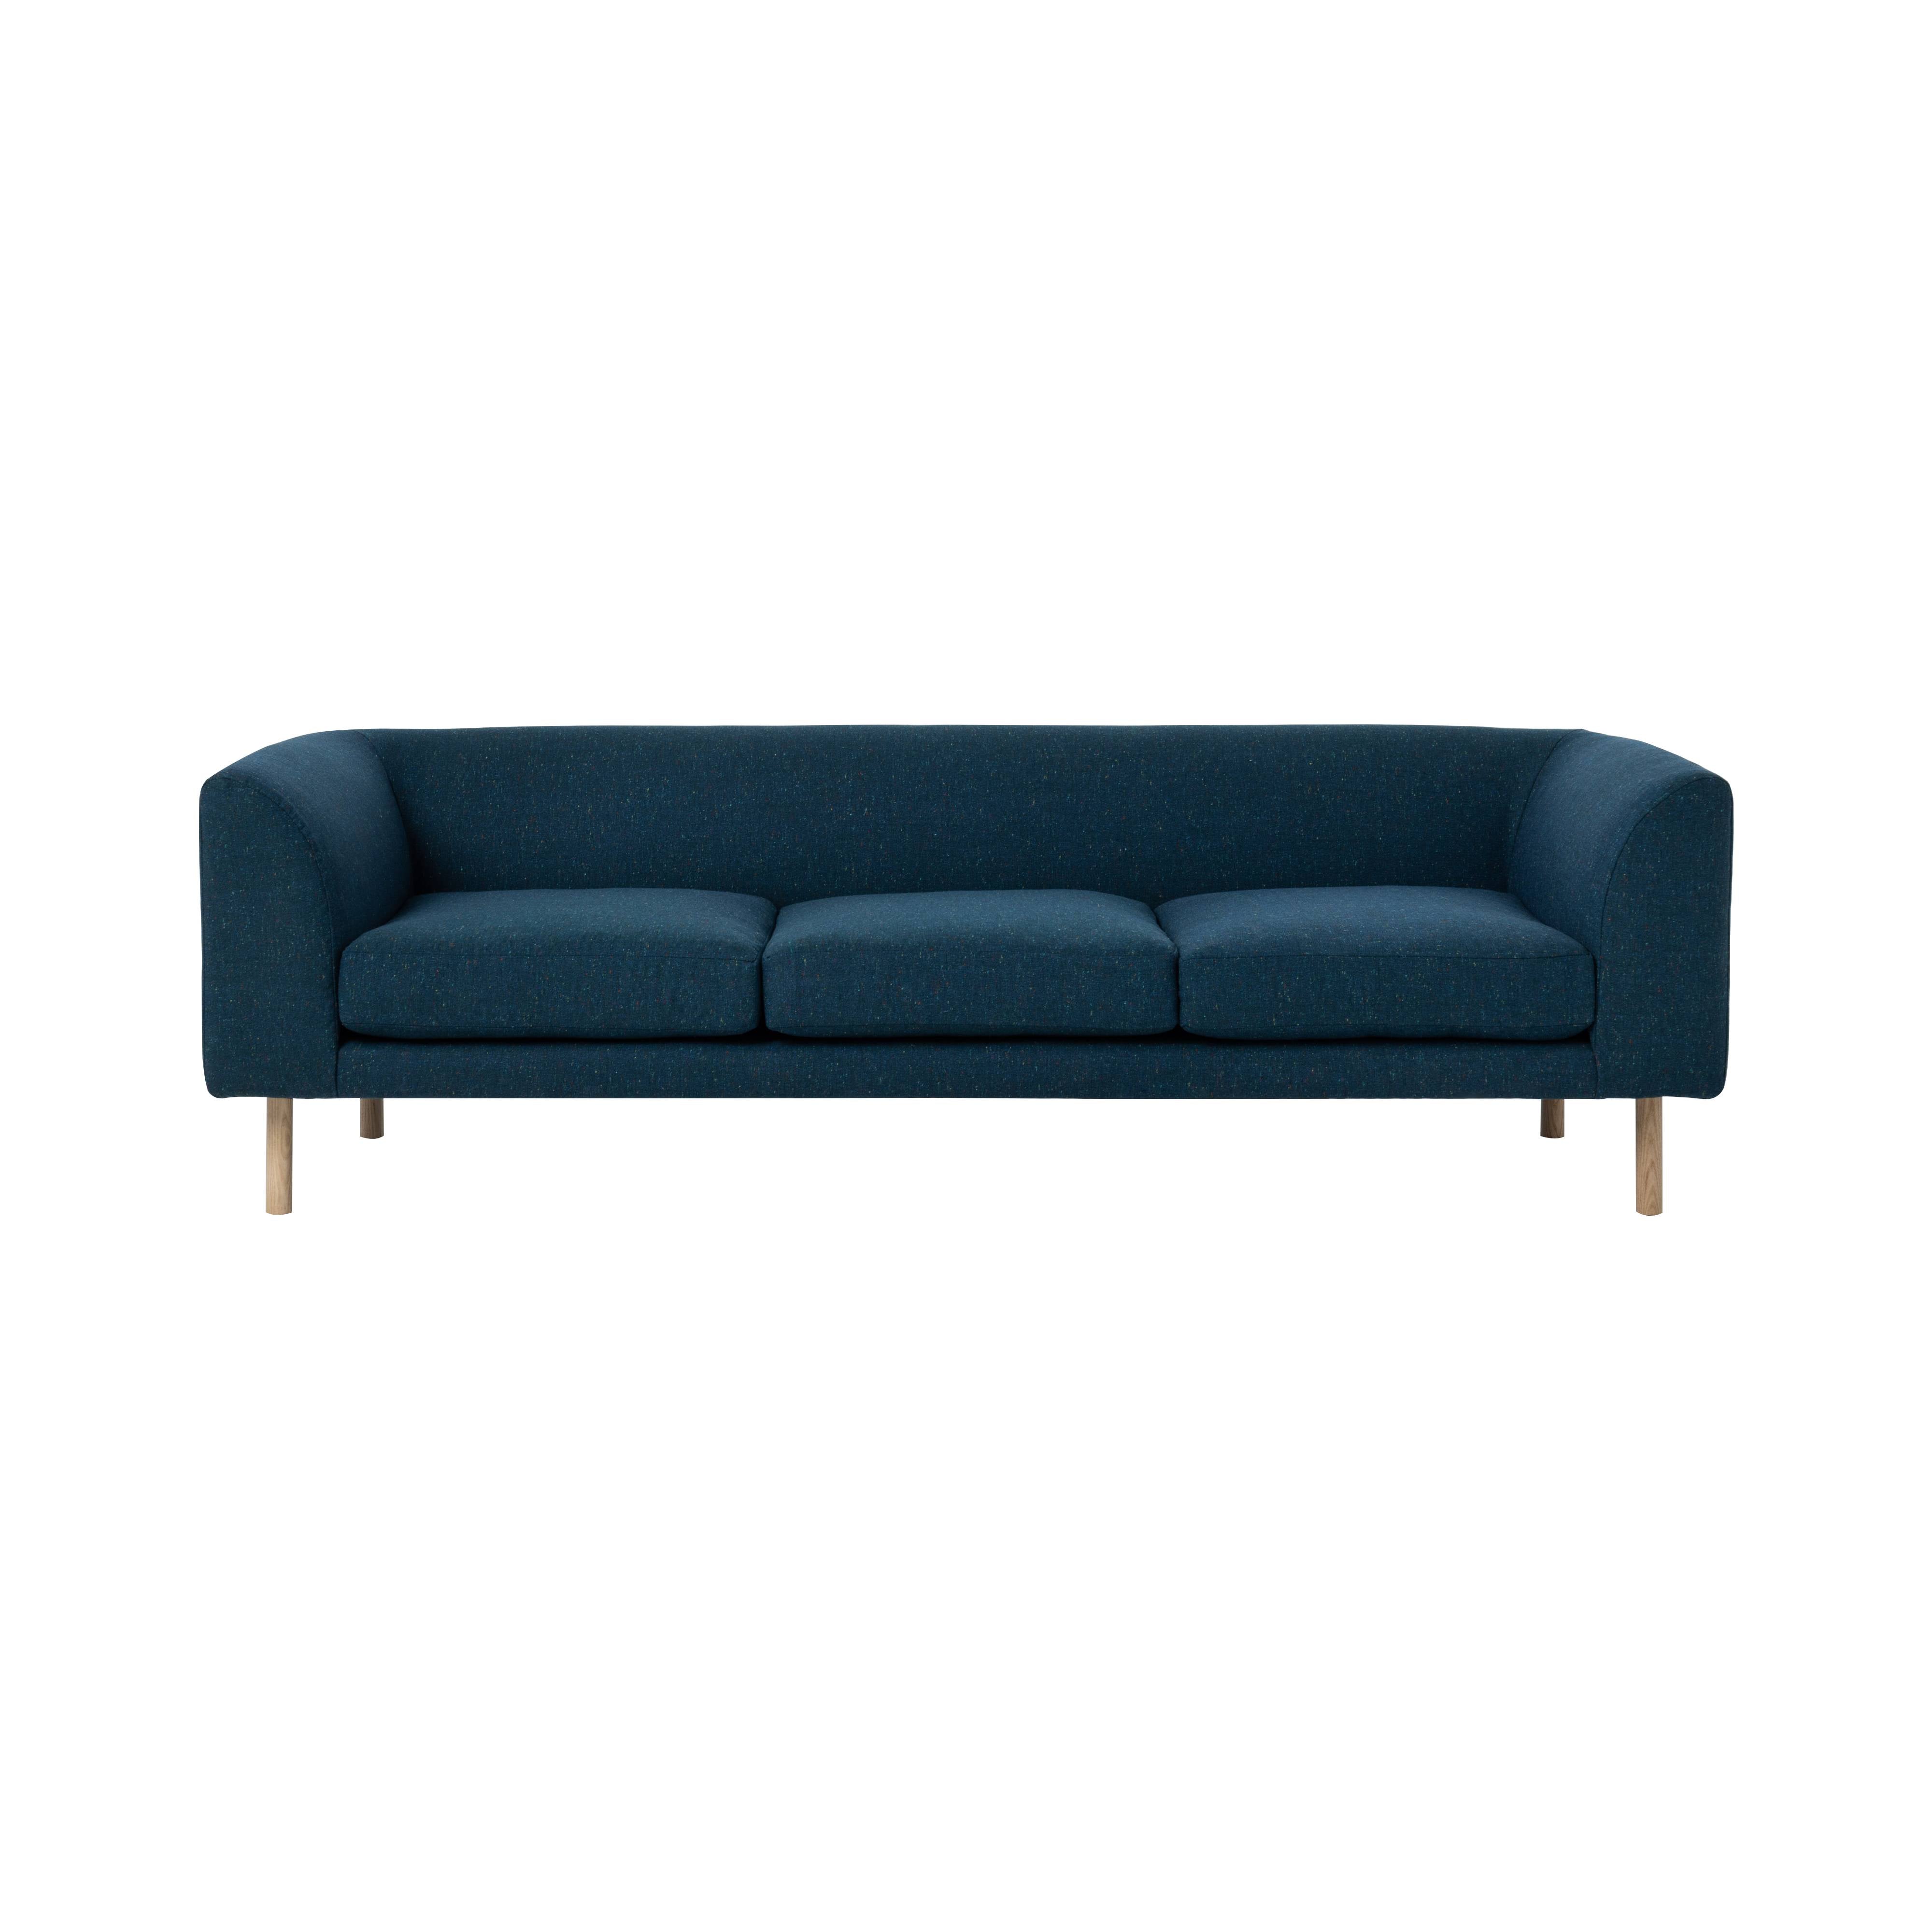 Woodgate Radius 3 Seater Sofa with Arm: Oak